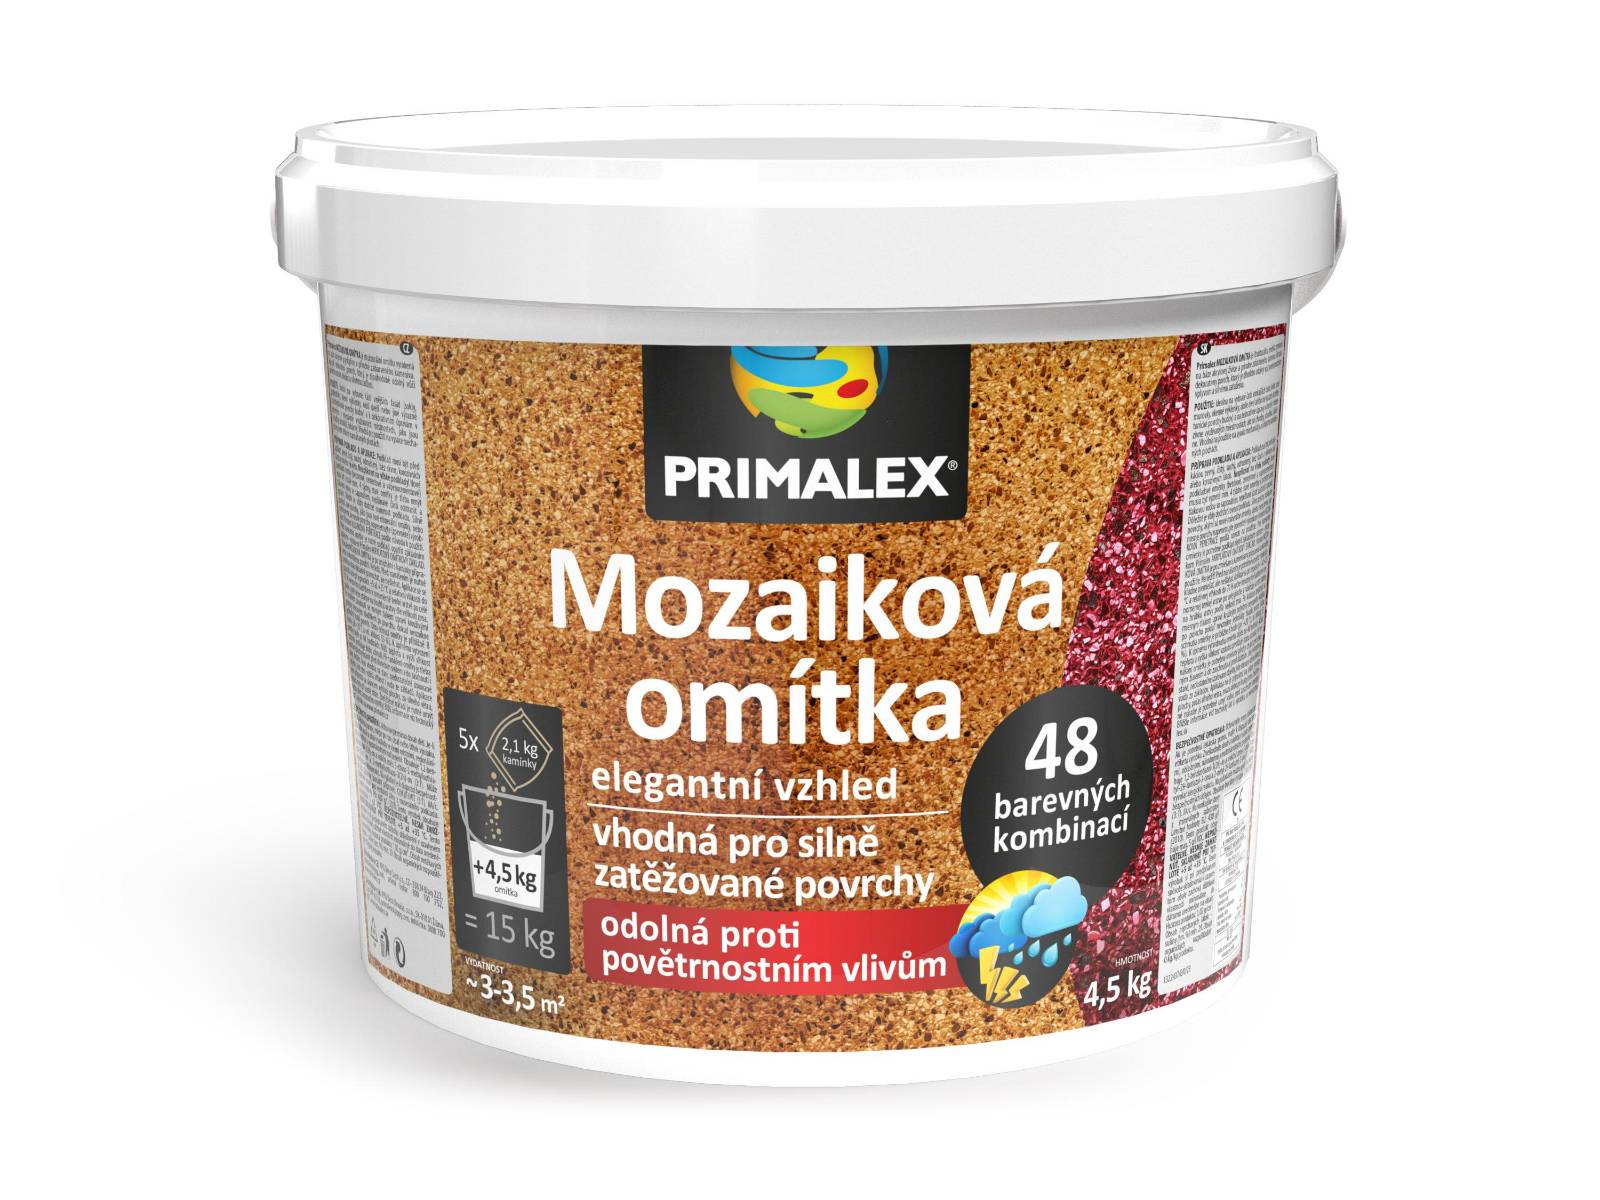 PRIMALEX Mozaiková omietka 15 kg (4.5 kg spojivo + 5 x 2.1 kg kameniva) mix farieb C+C+F+A+A